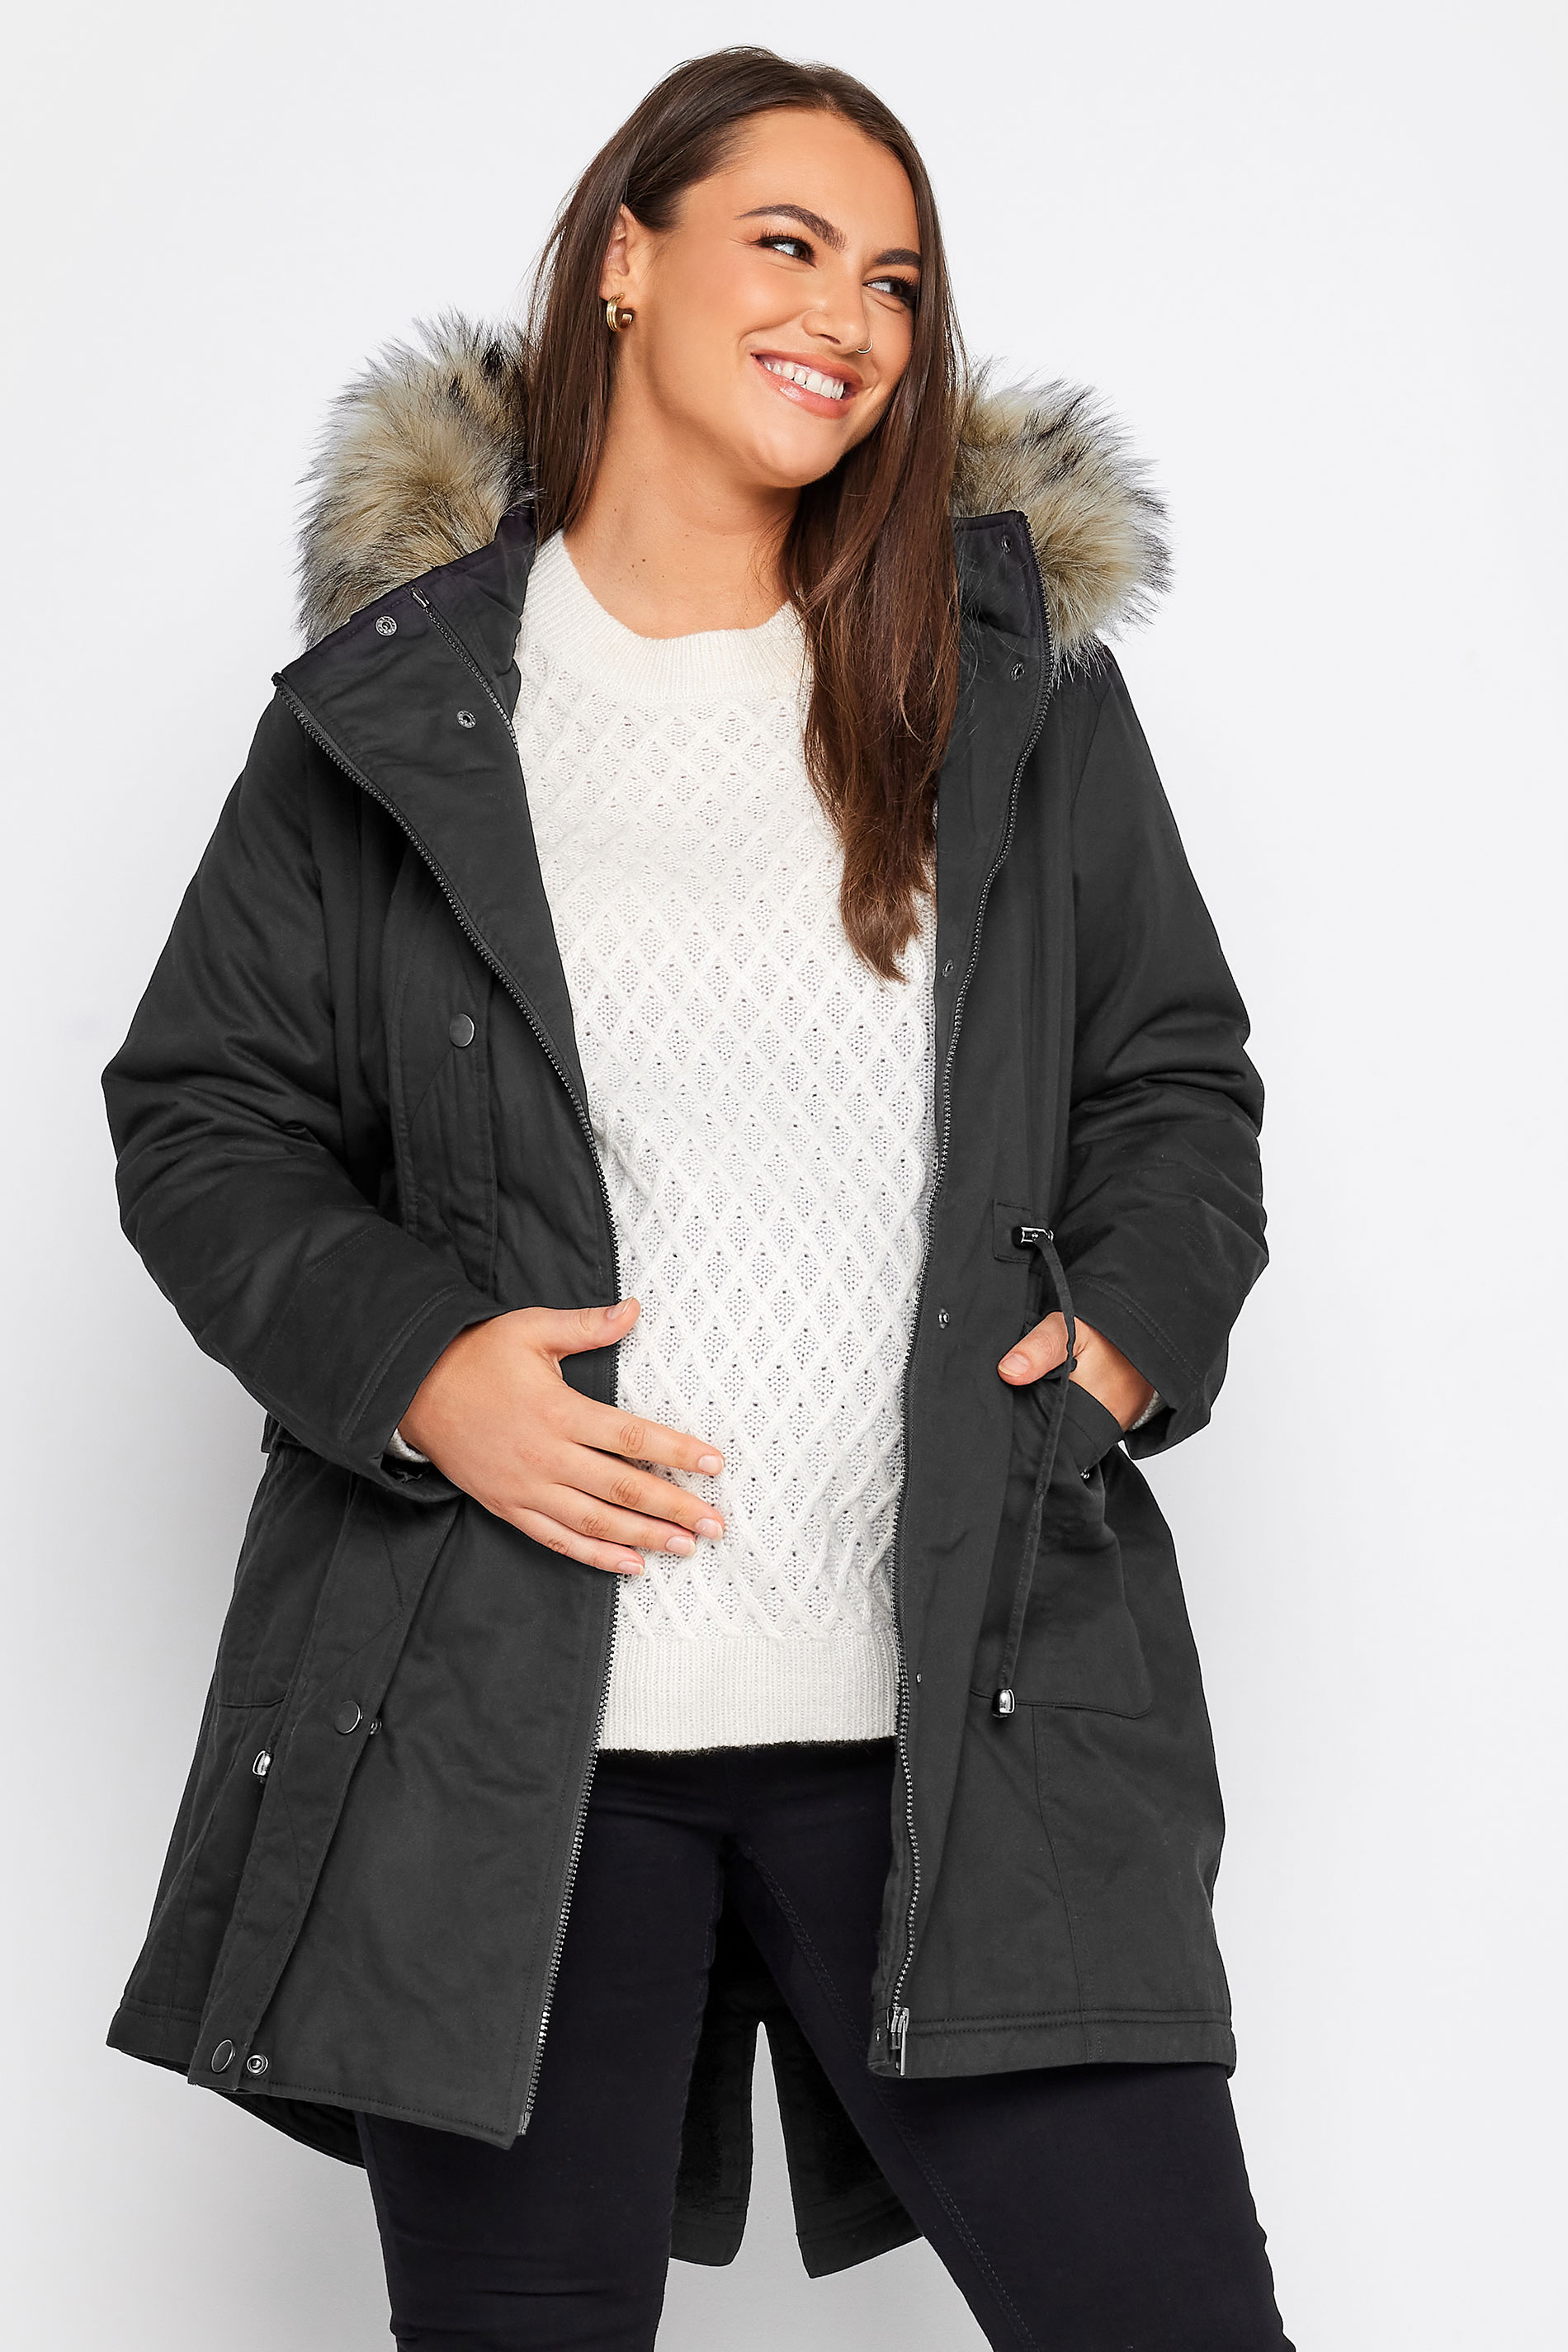 BUMP IT UP MATERNITY Plus Size Curve Black Parka Coat | Yours Clothing  1